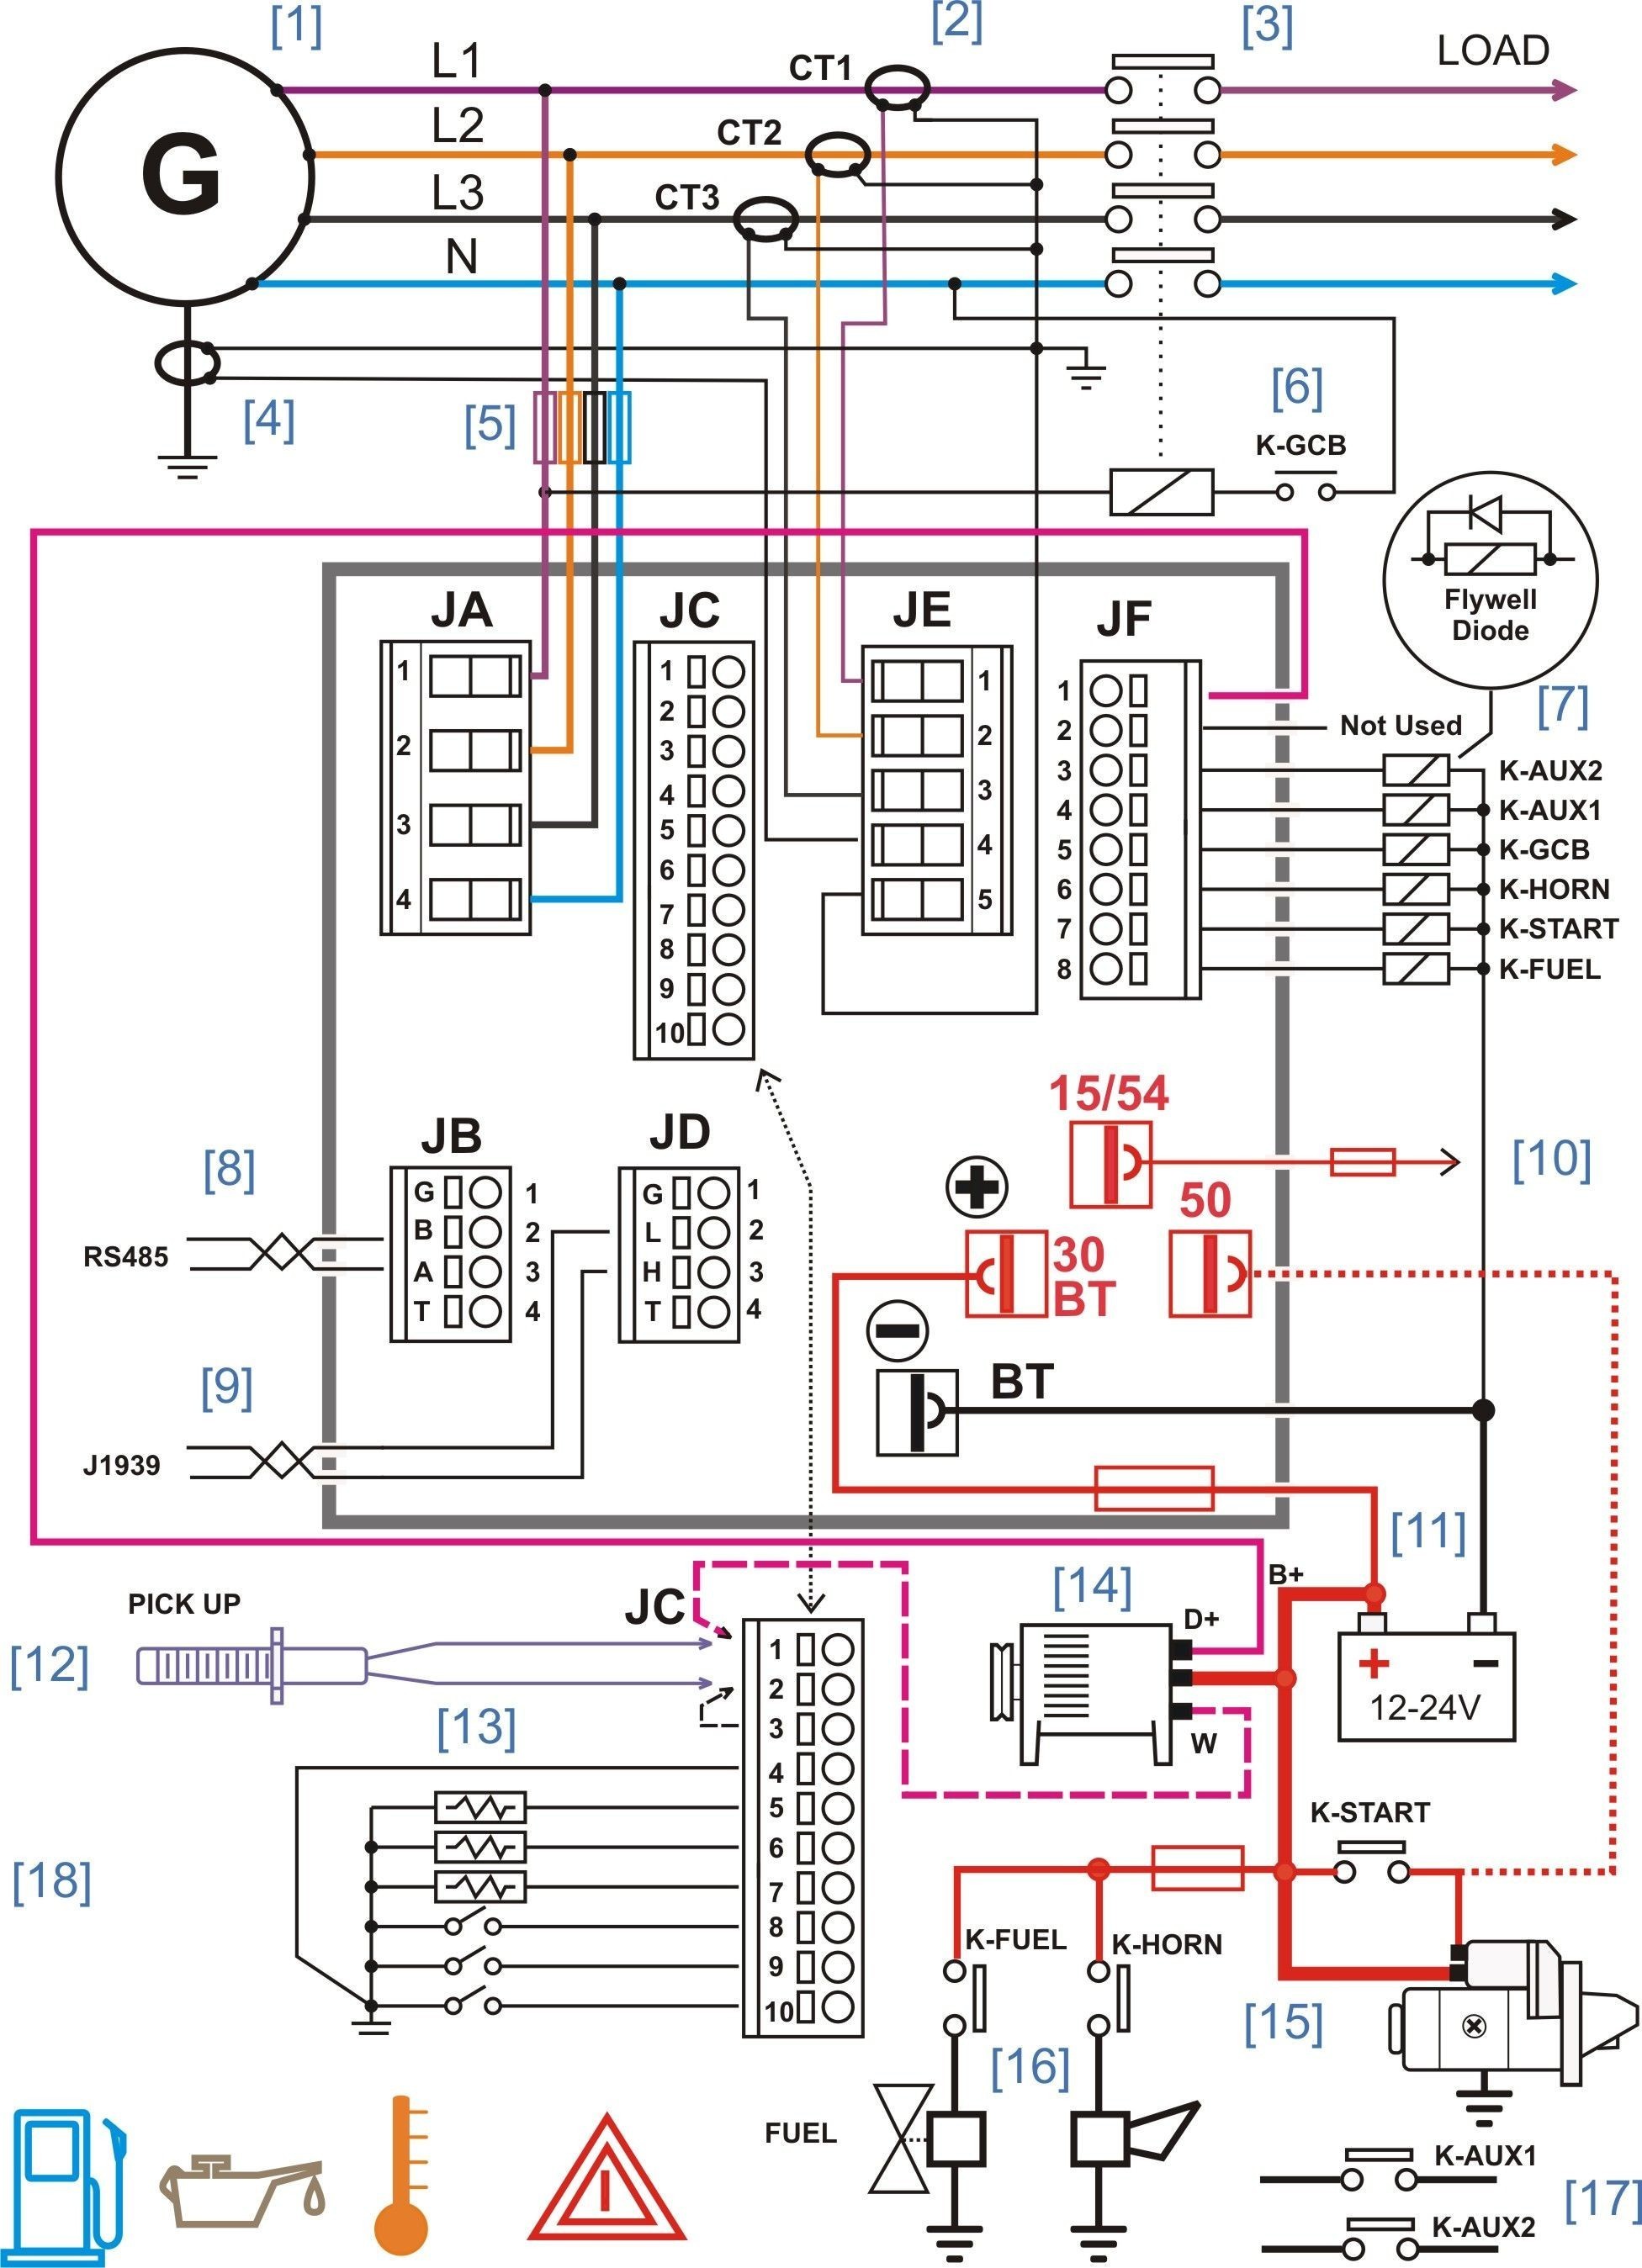 Wiring Diagram for 20kw Generac Generator Inspirationa Wiring Diagram Backup Generator & Portable Generator Transfer